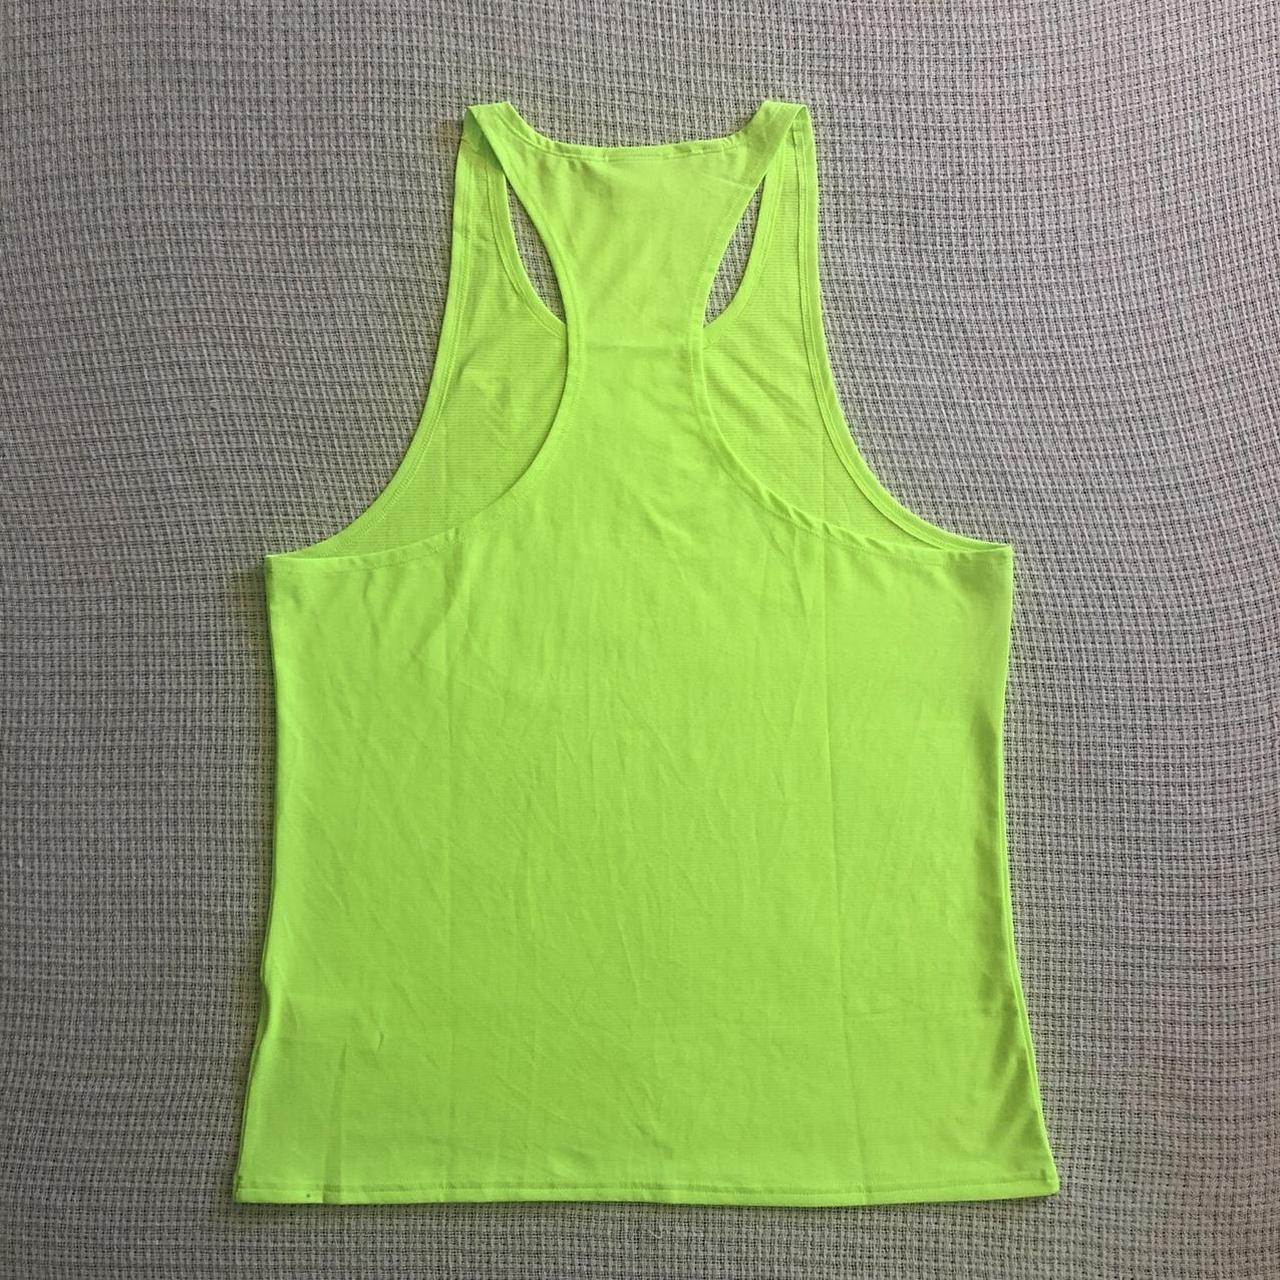 gymshark neon green tank top 💚 brand new and super - Depop